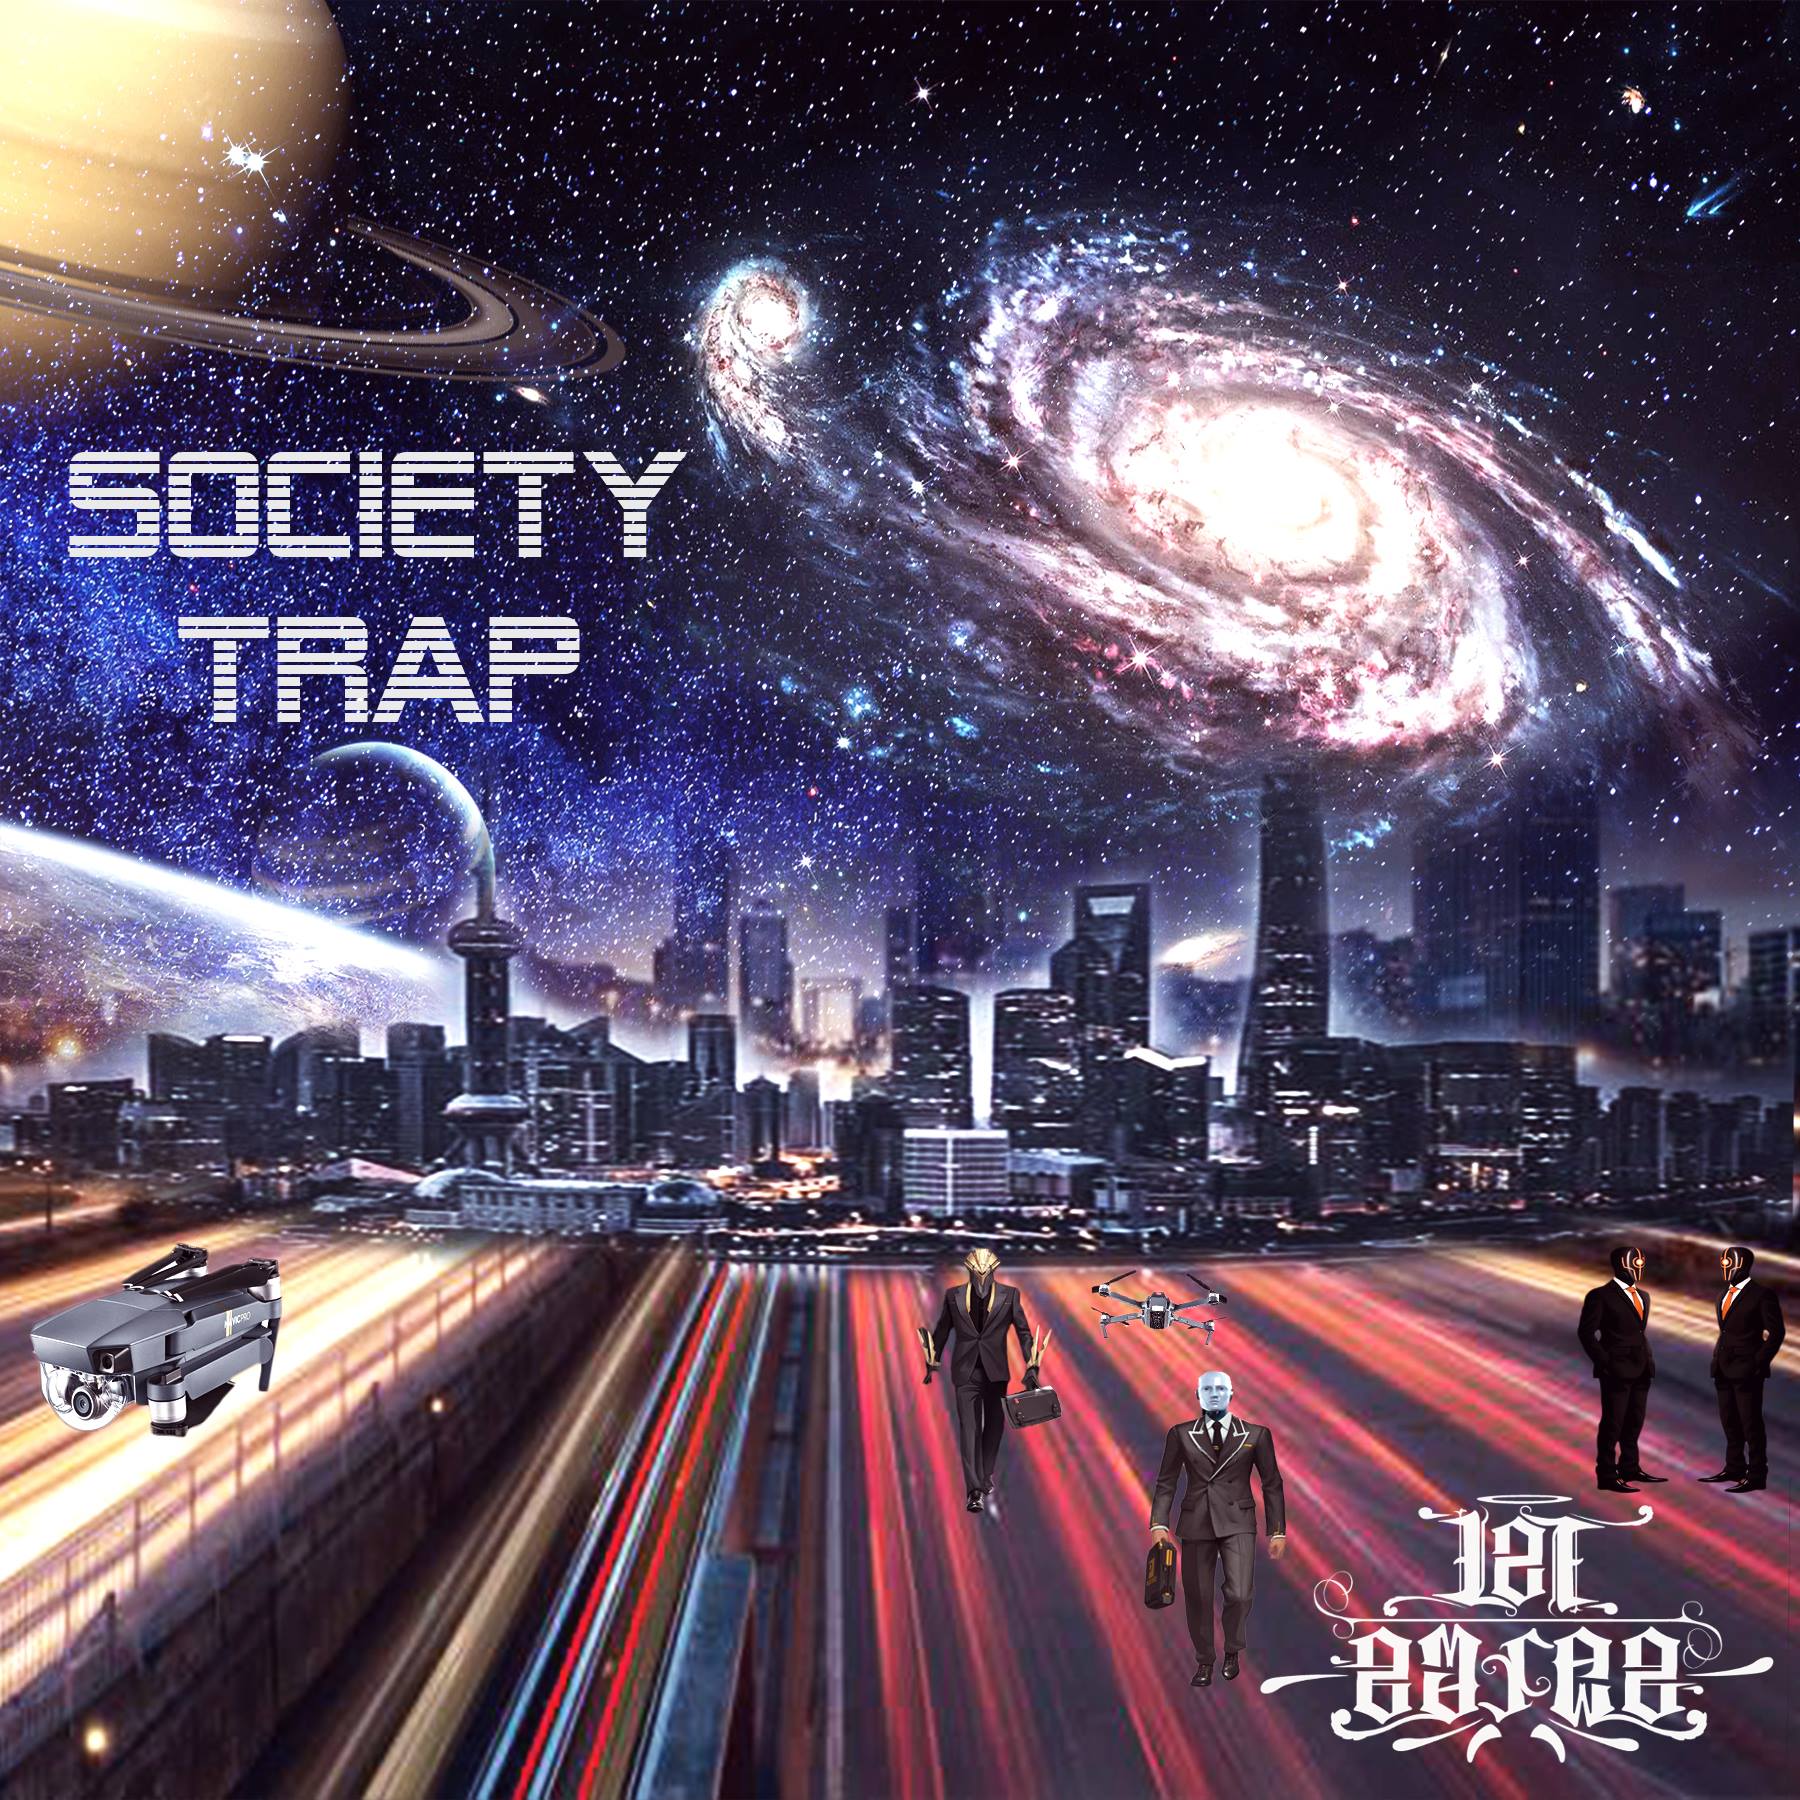 Lee Emcee – ‘Society Trap’